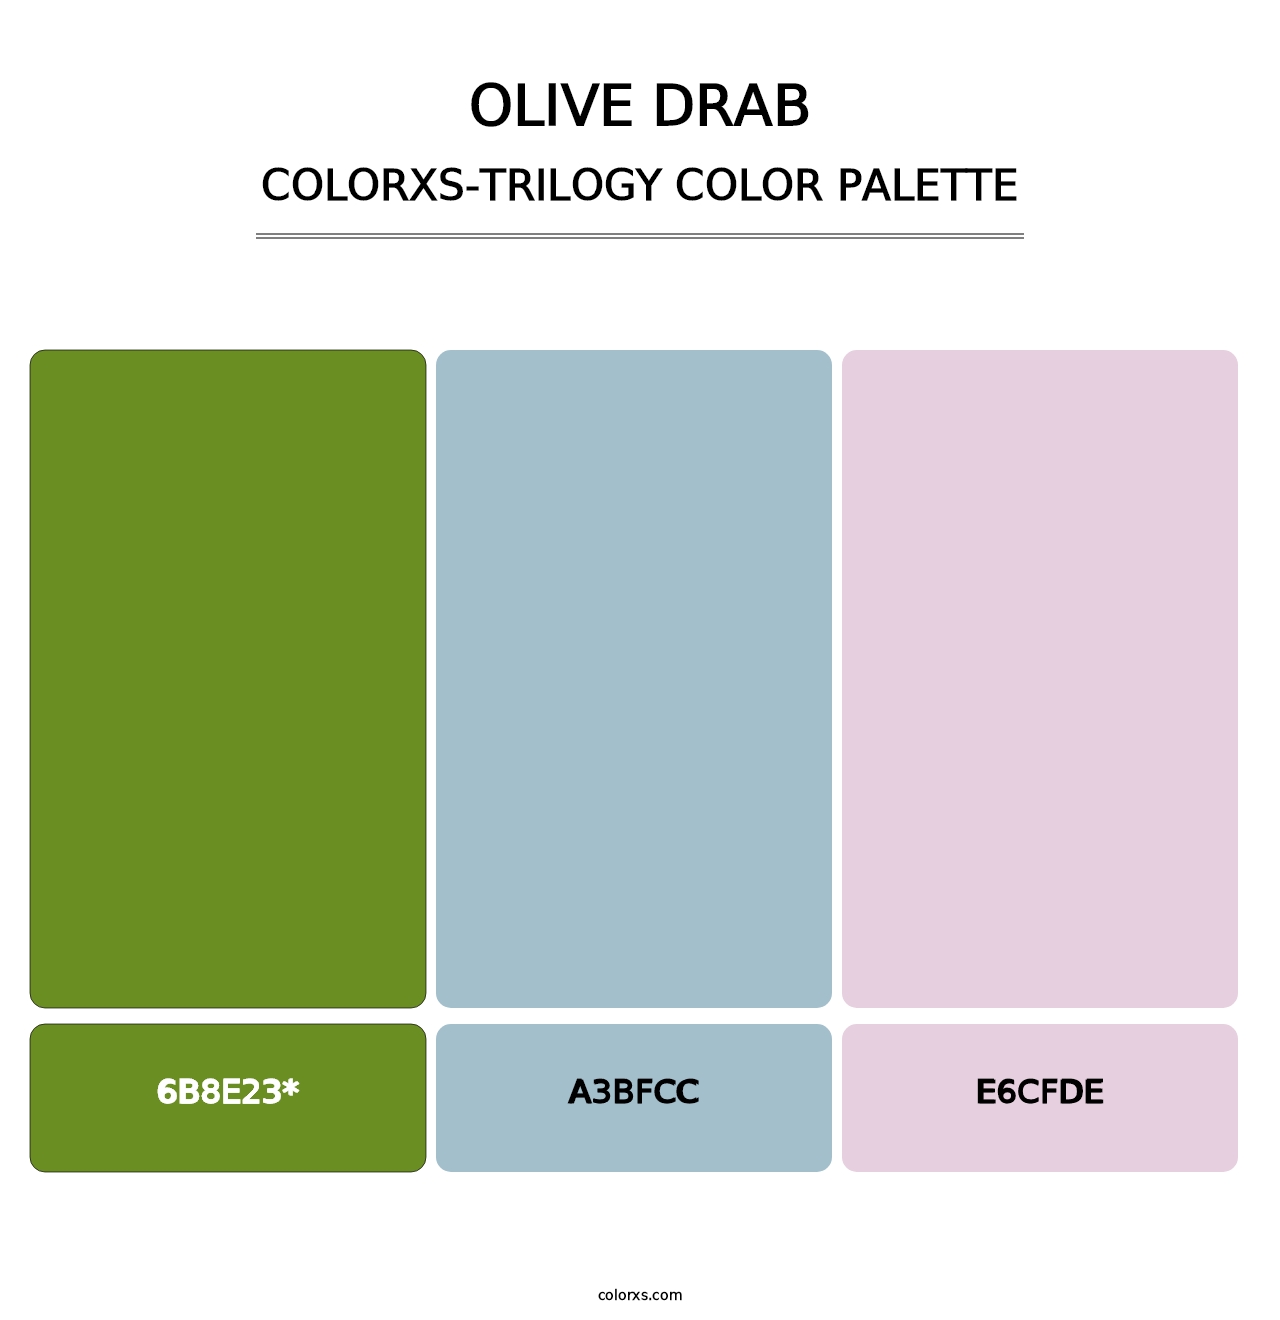 Olive Drab - Colorxs Trilogy Palette